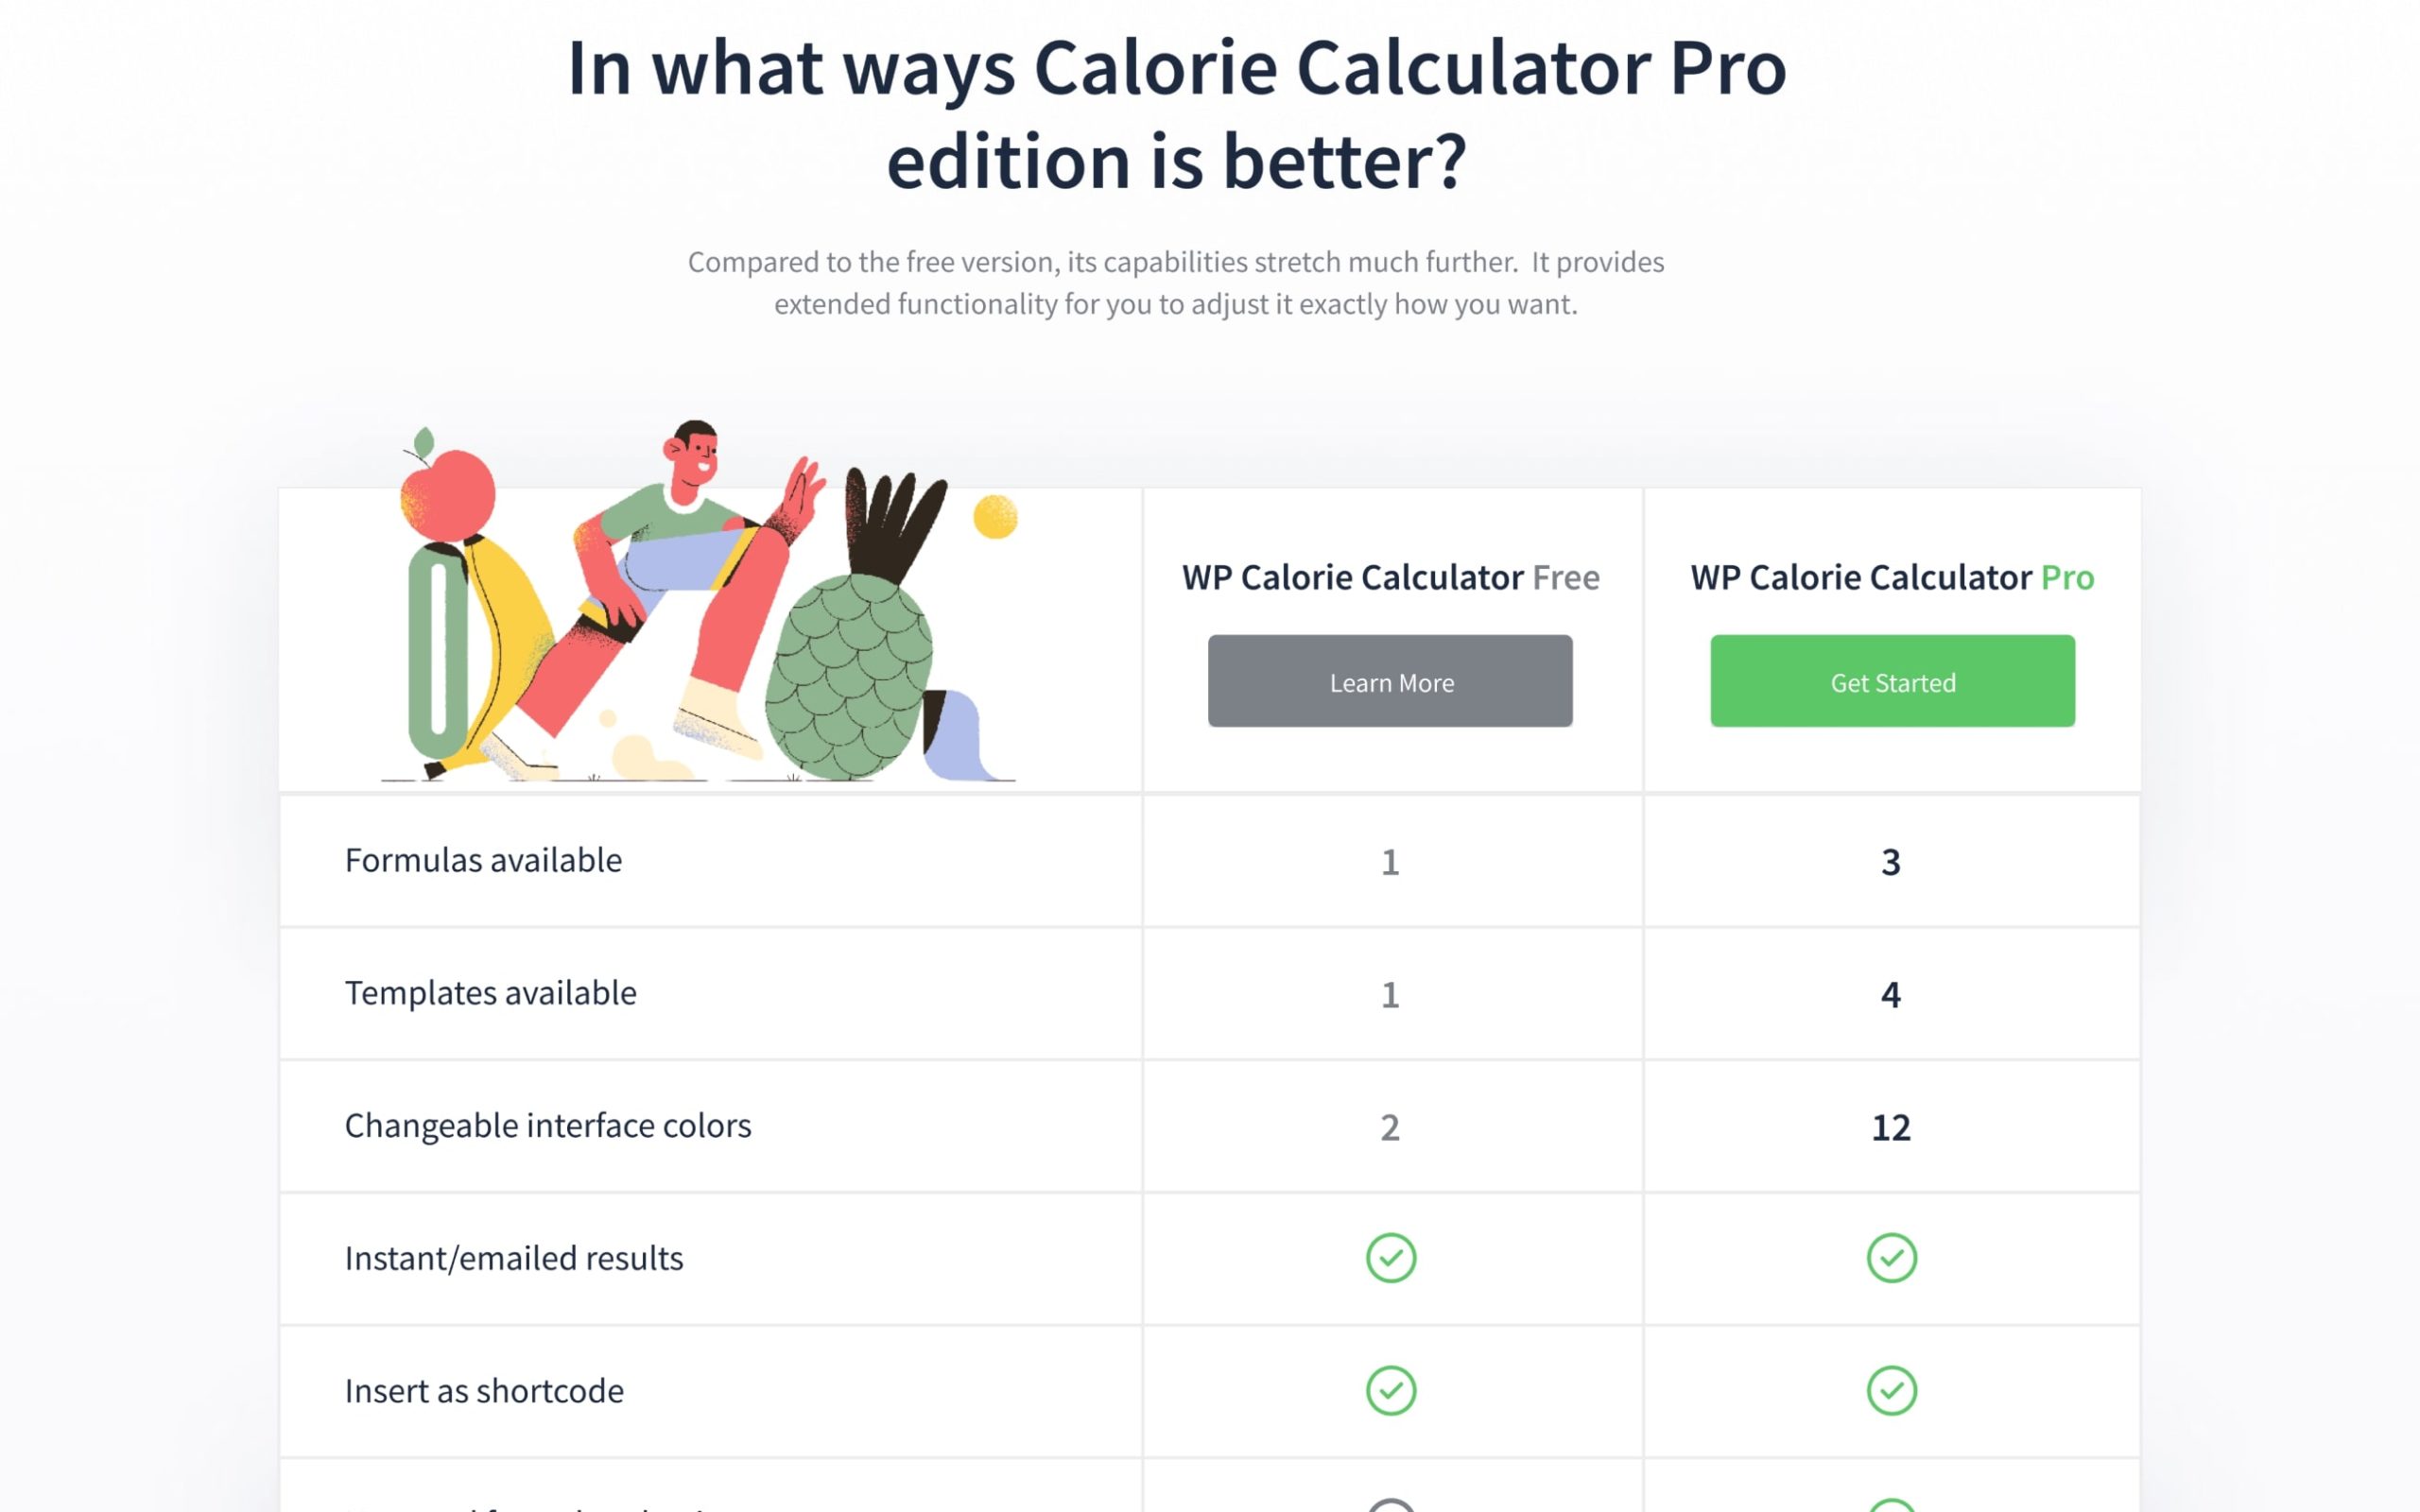 WP Calorie Calculator Pro features